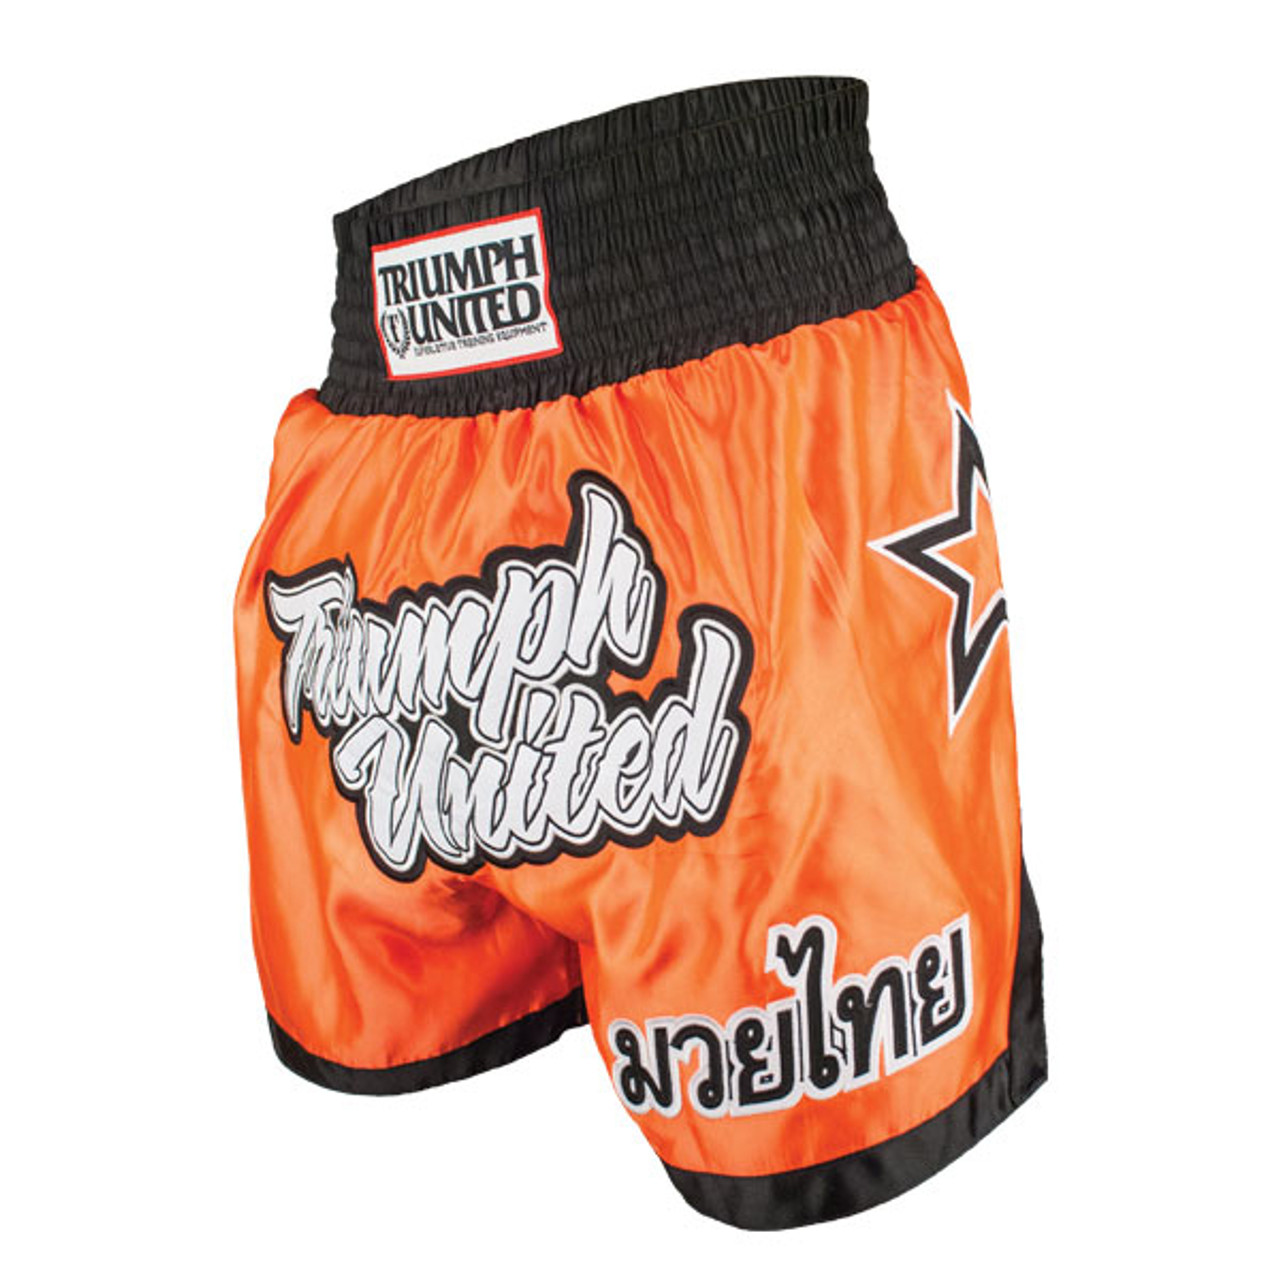 Triumph United Muay Thai Fighter Shorts